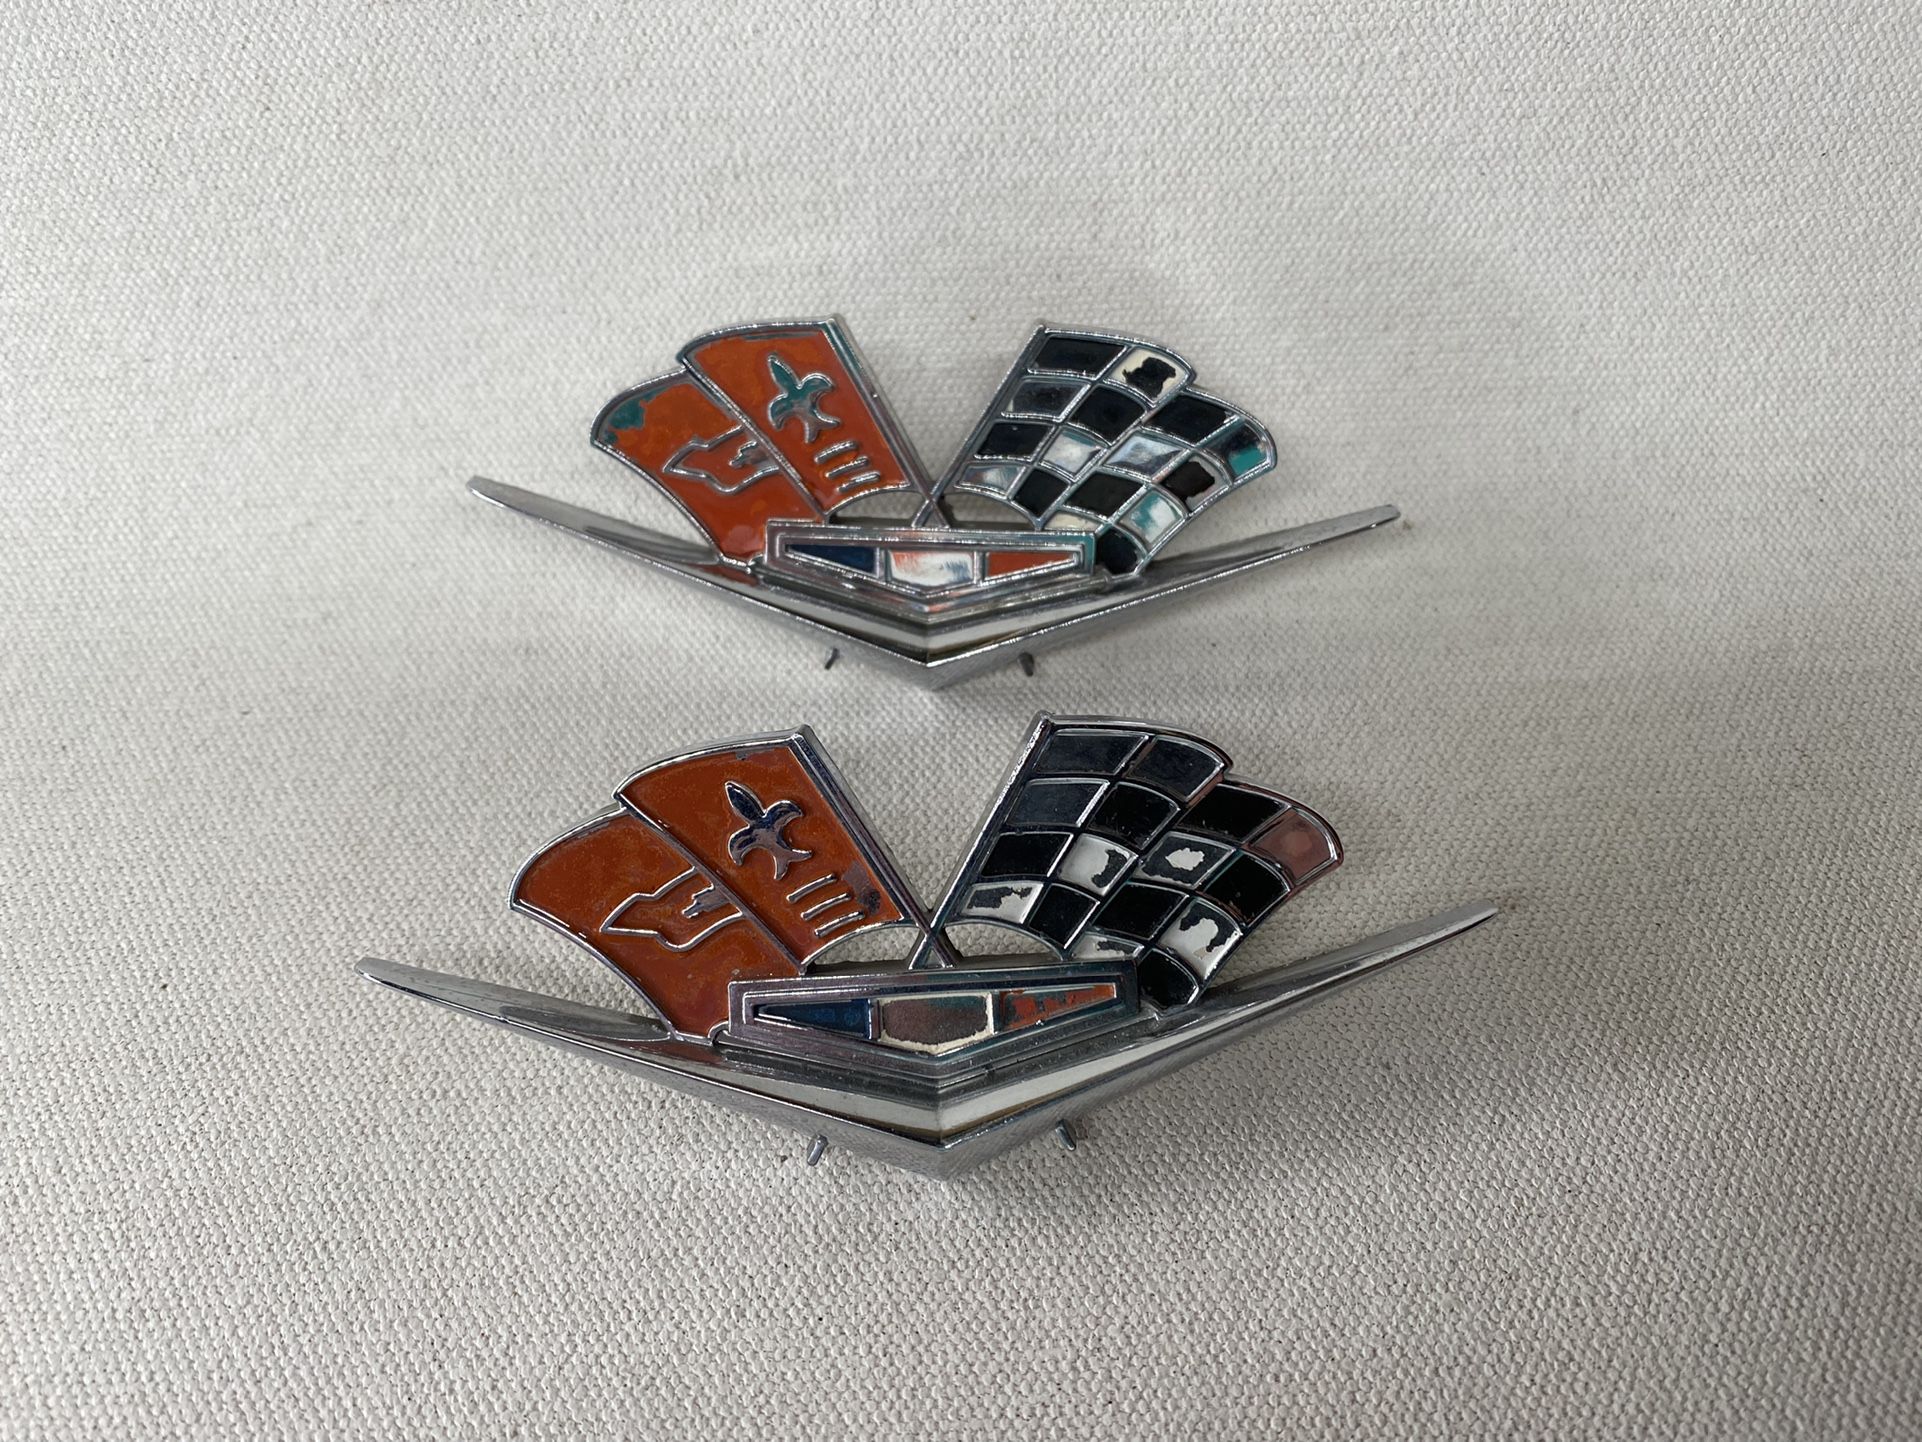 Vintage 1962-63 Chevy Corvette Cross Flag Emblems - HTF